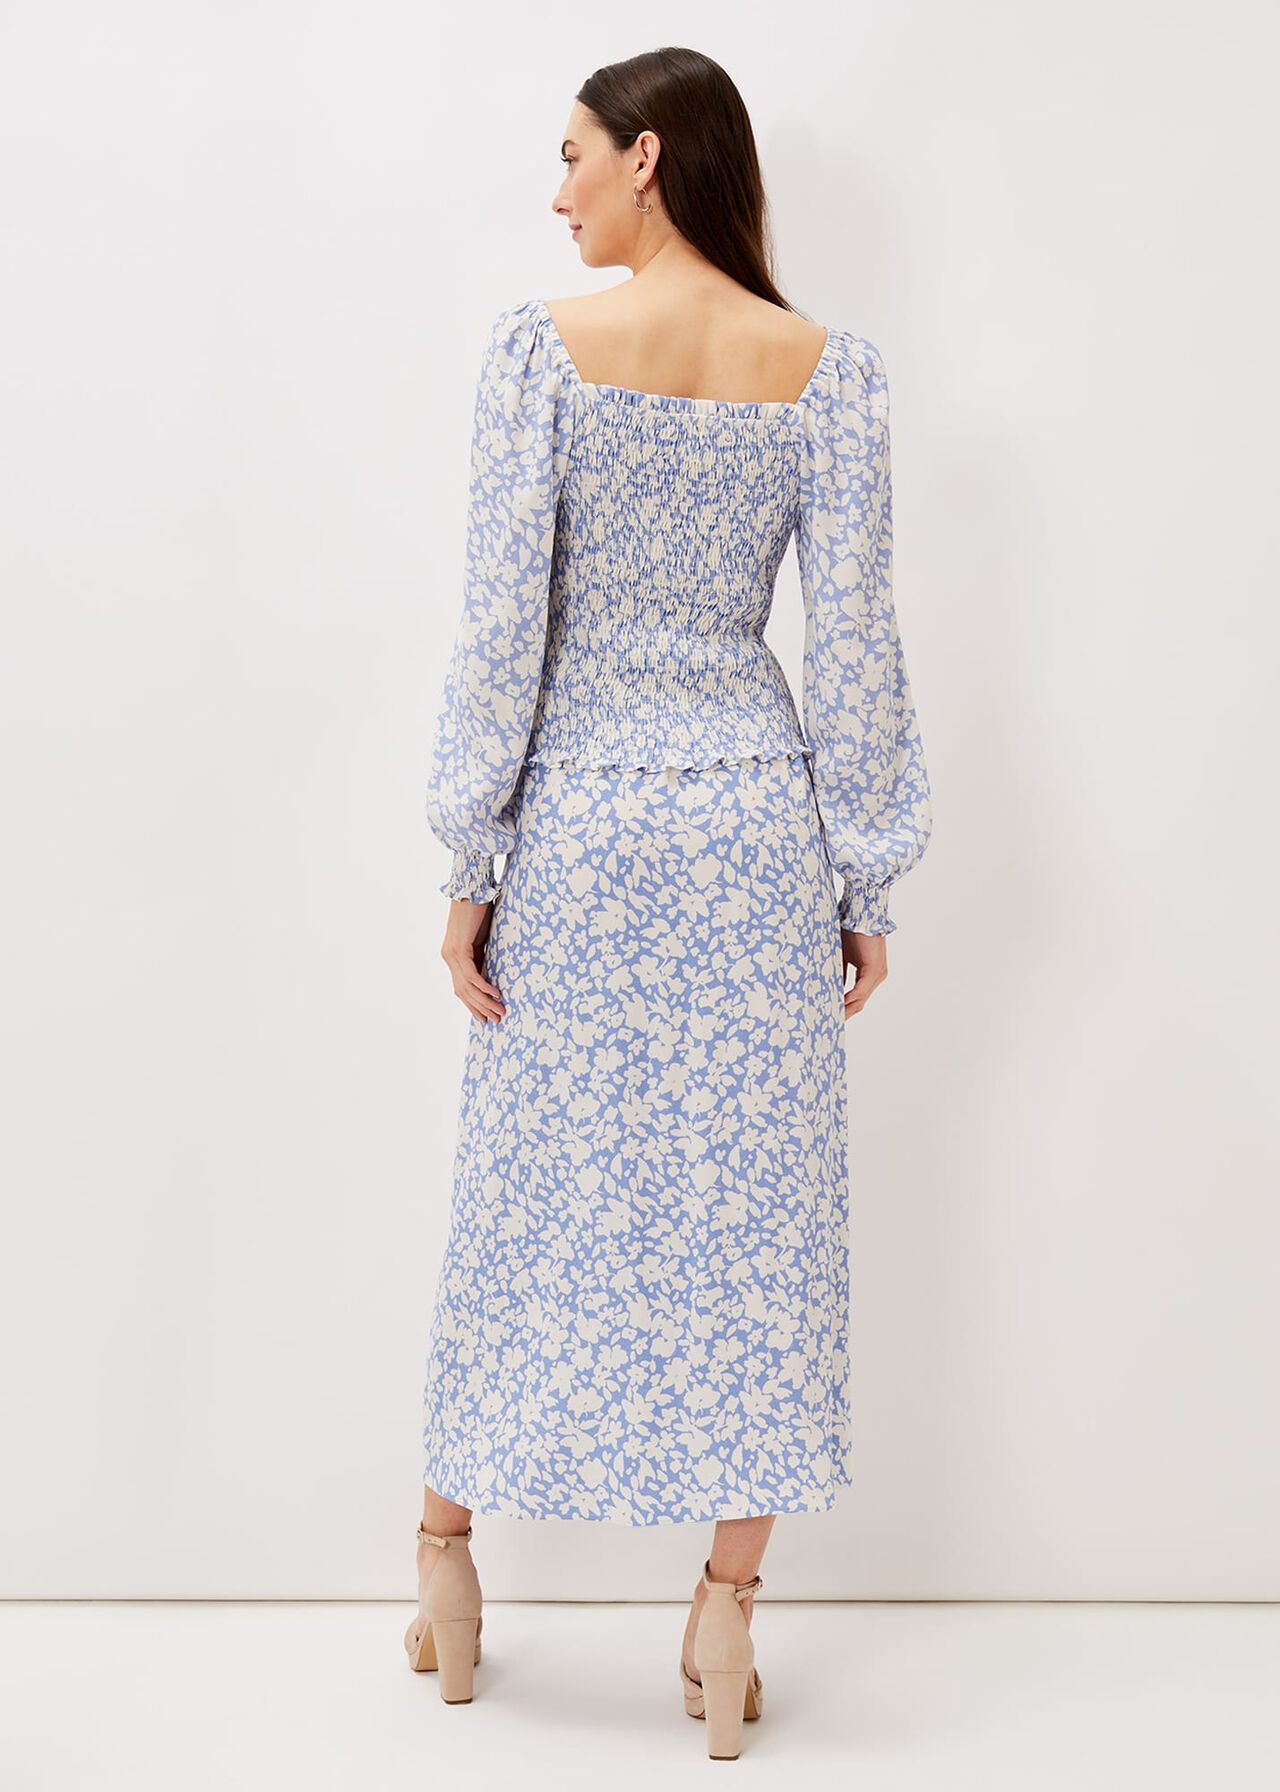 Phillipa Floral Print Co-Ord Skirt